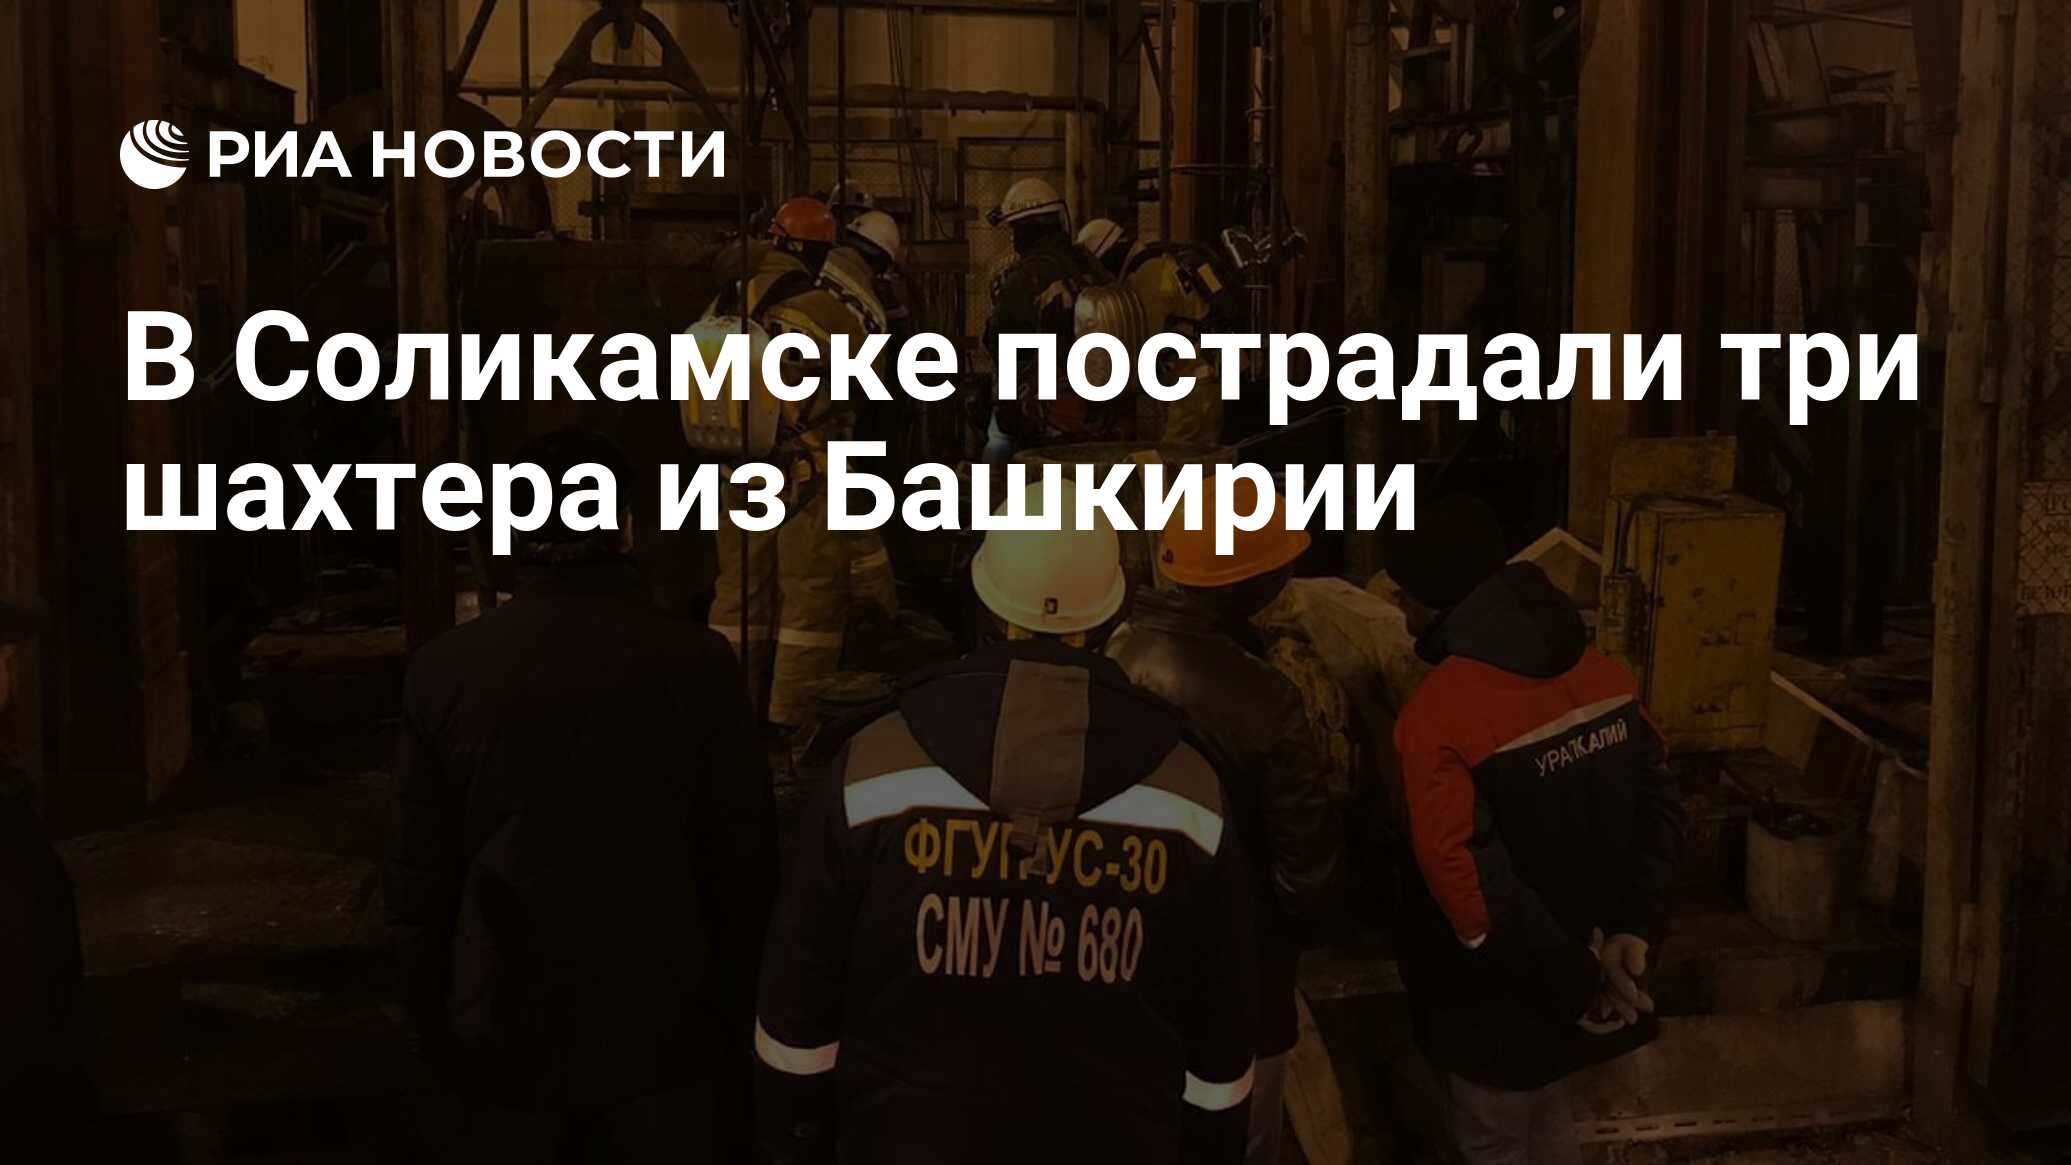 Шахтеры из башкирии. Пожар в шахте Соликамск.